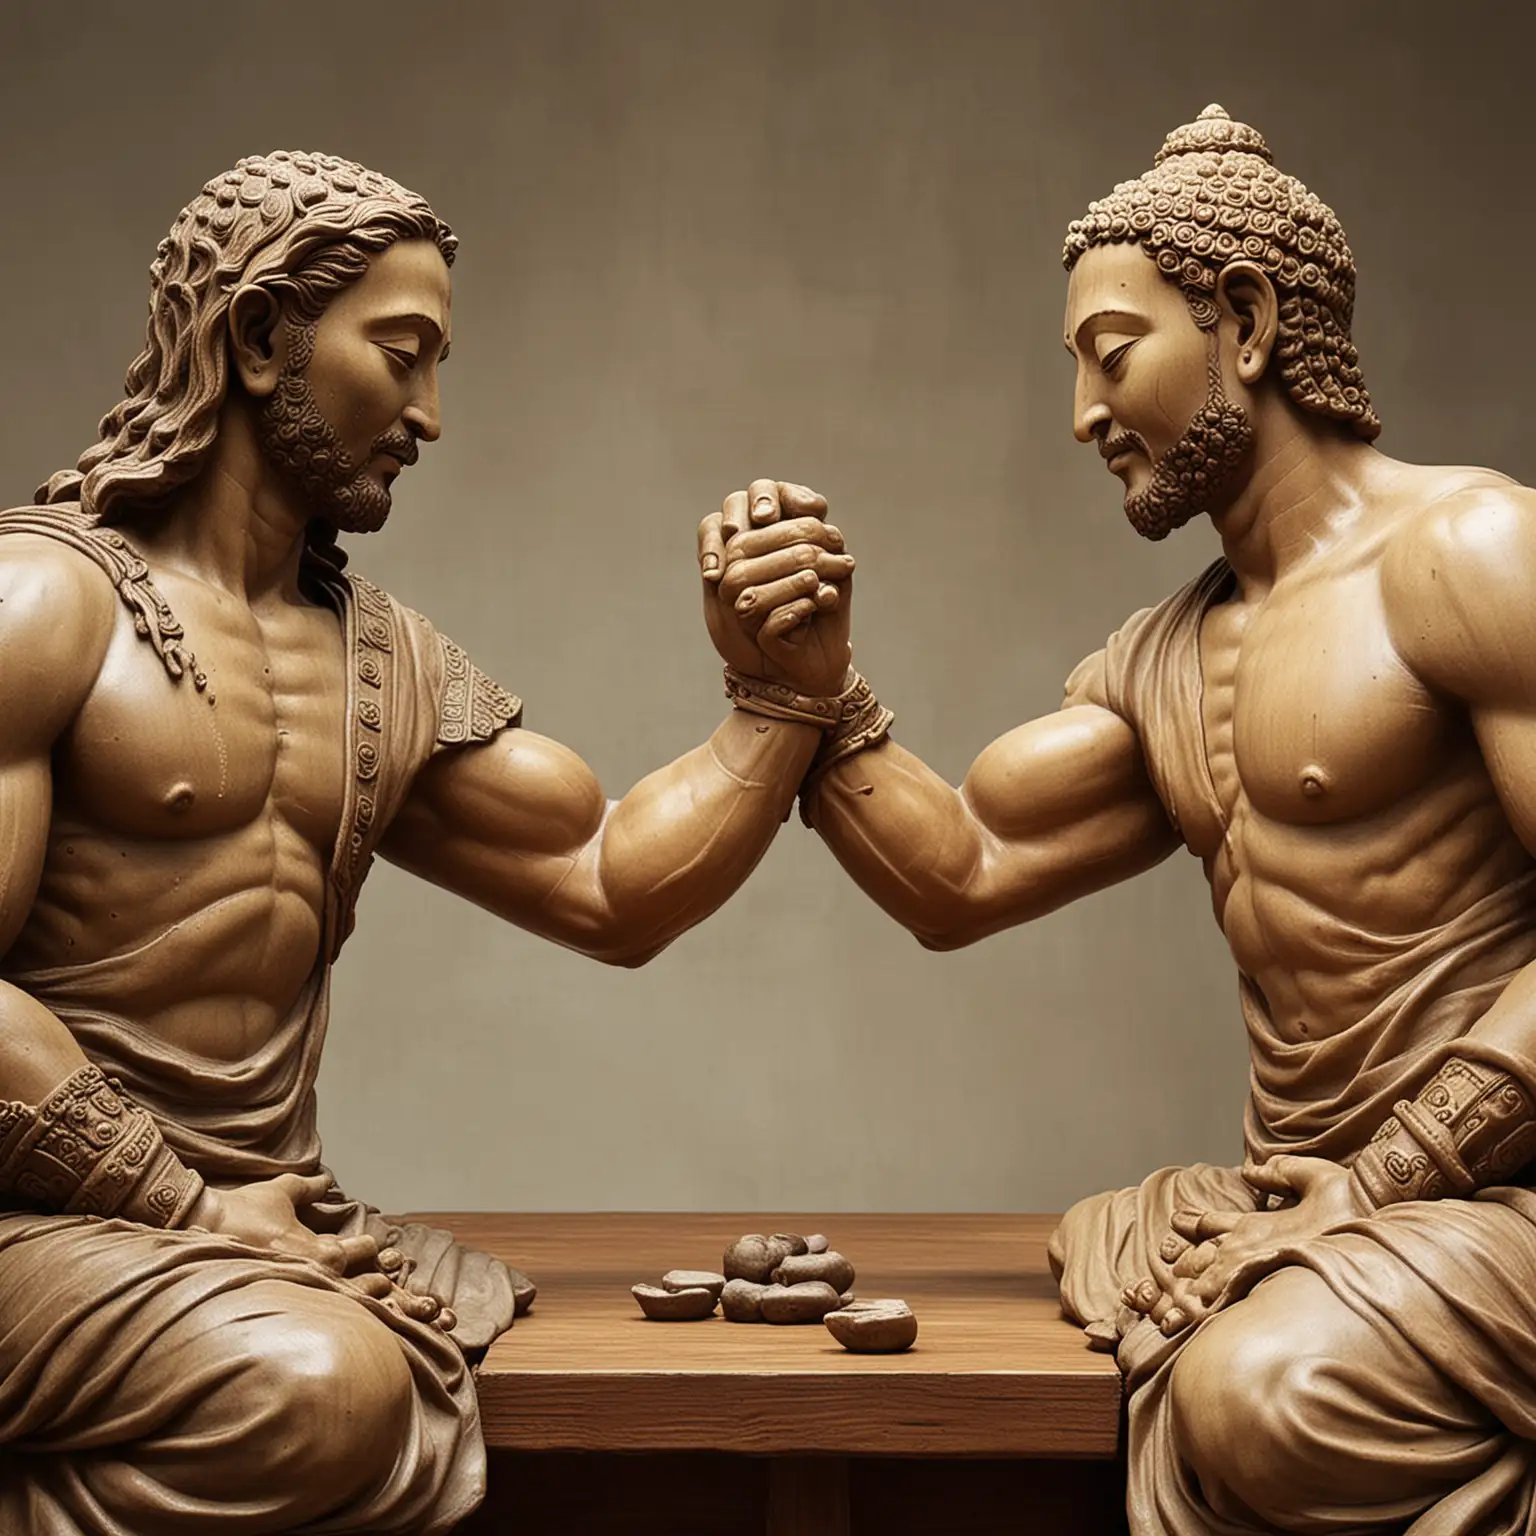 Jesus arm-wrestling Buddha.  Both are corporeal humanoids.